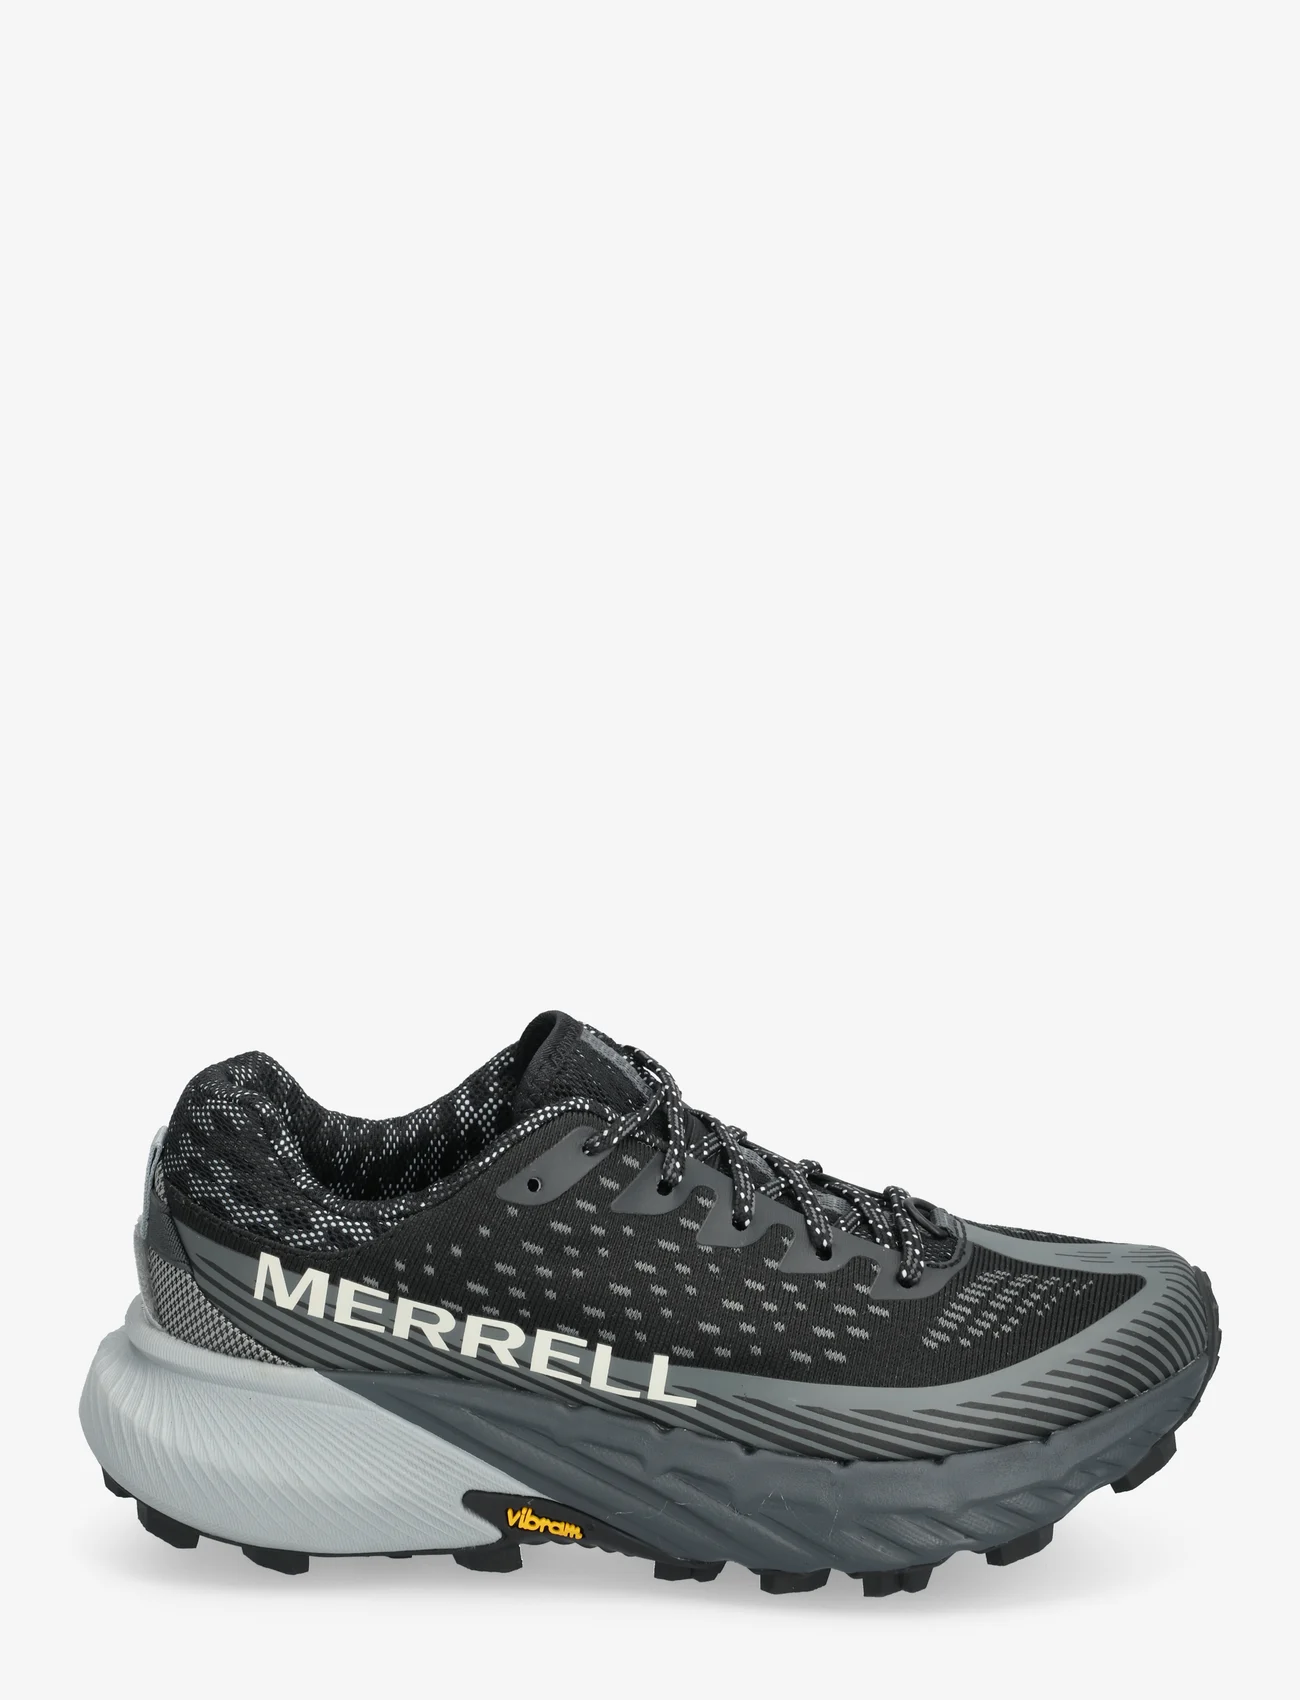 Merrell - Women's Agility Peak 5 - Black/Gran - running shoes - black/granite - 1